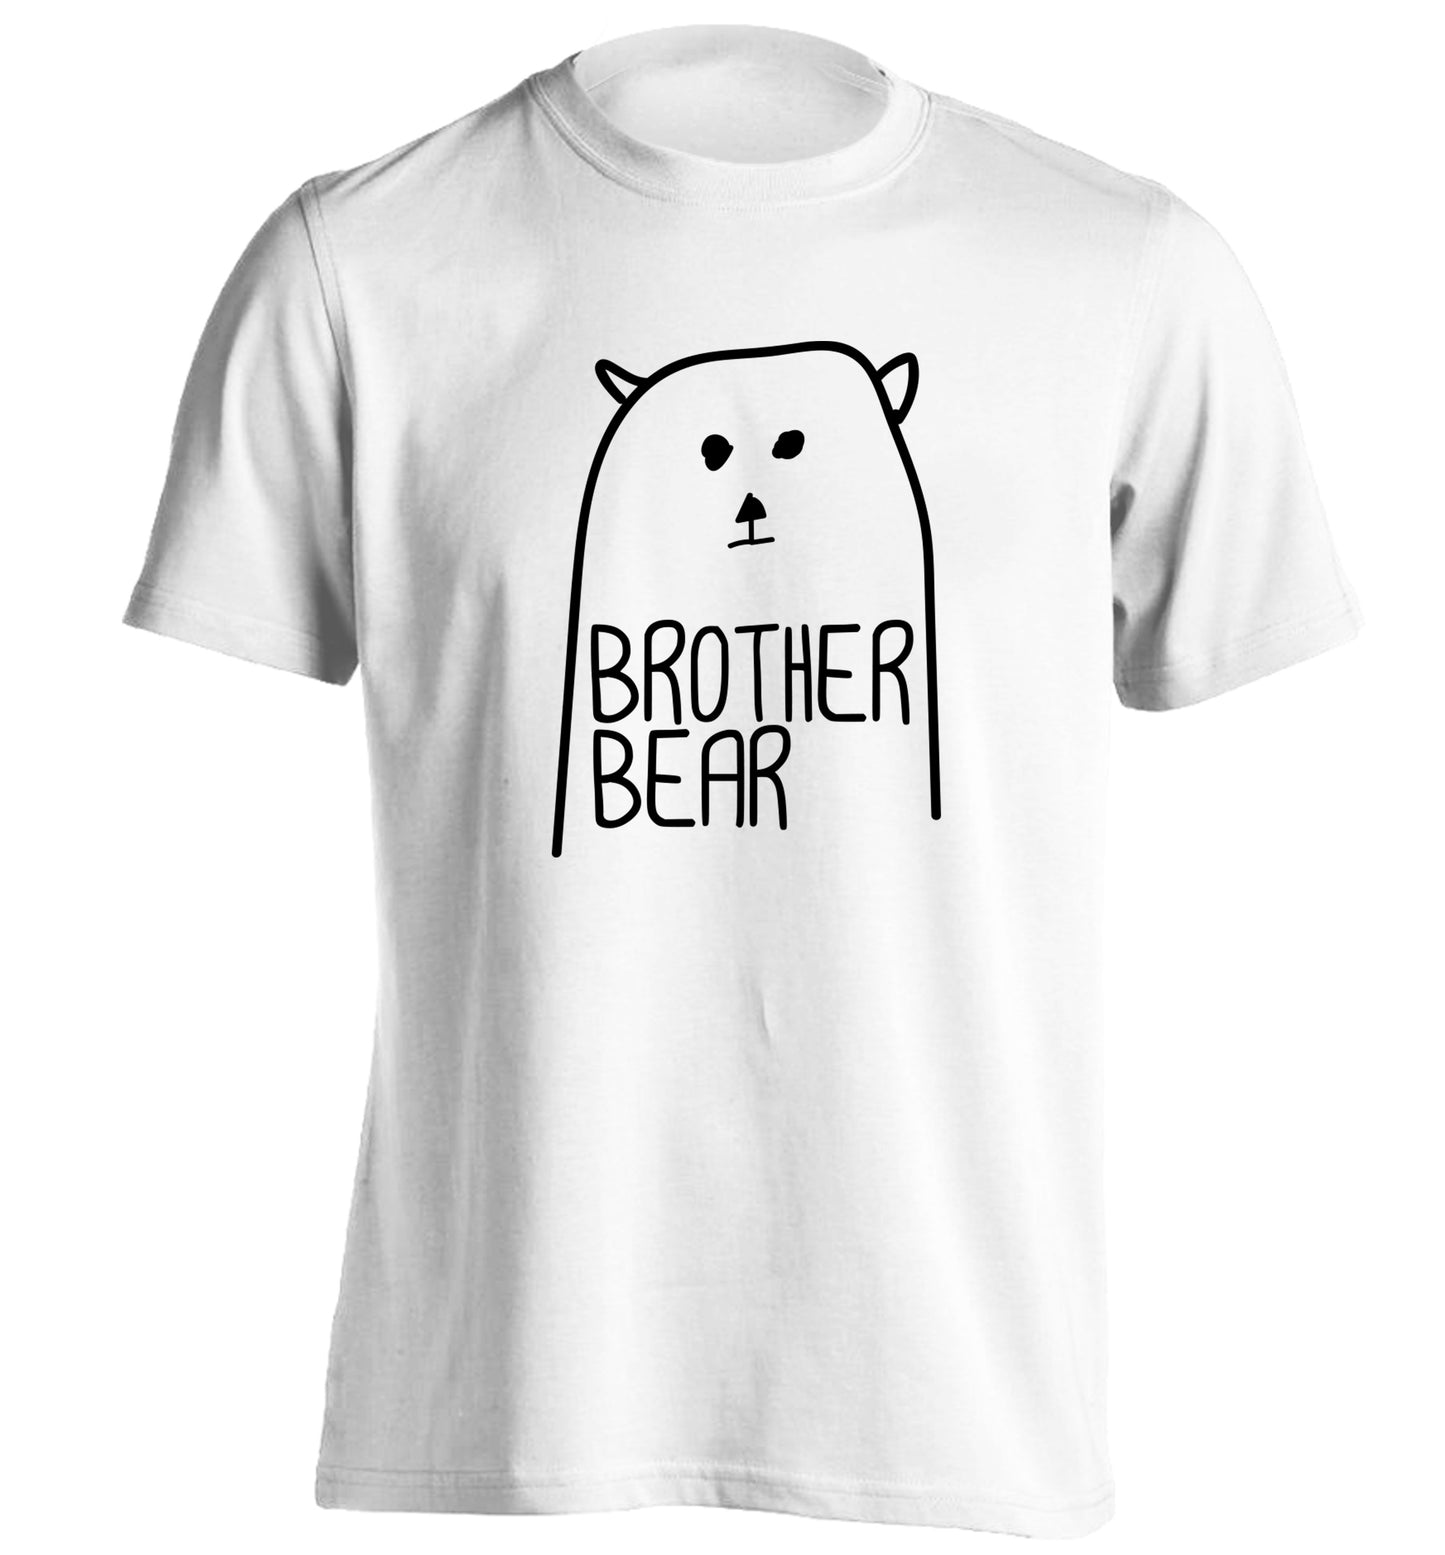 Brother bear adults unisex white Tshirt 2XL